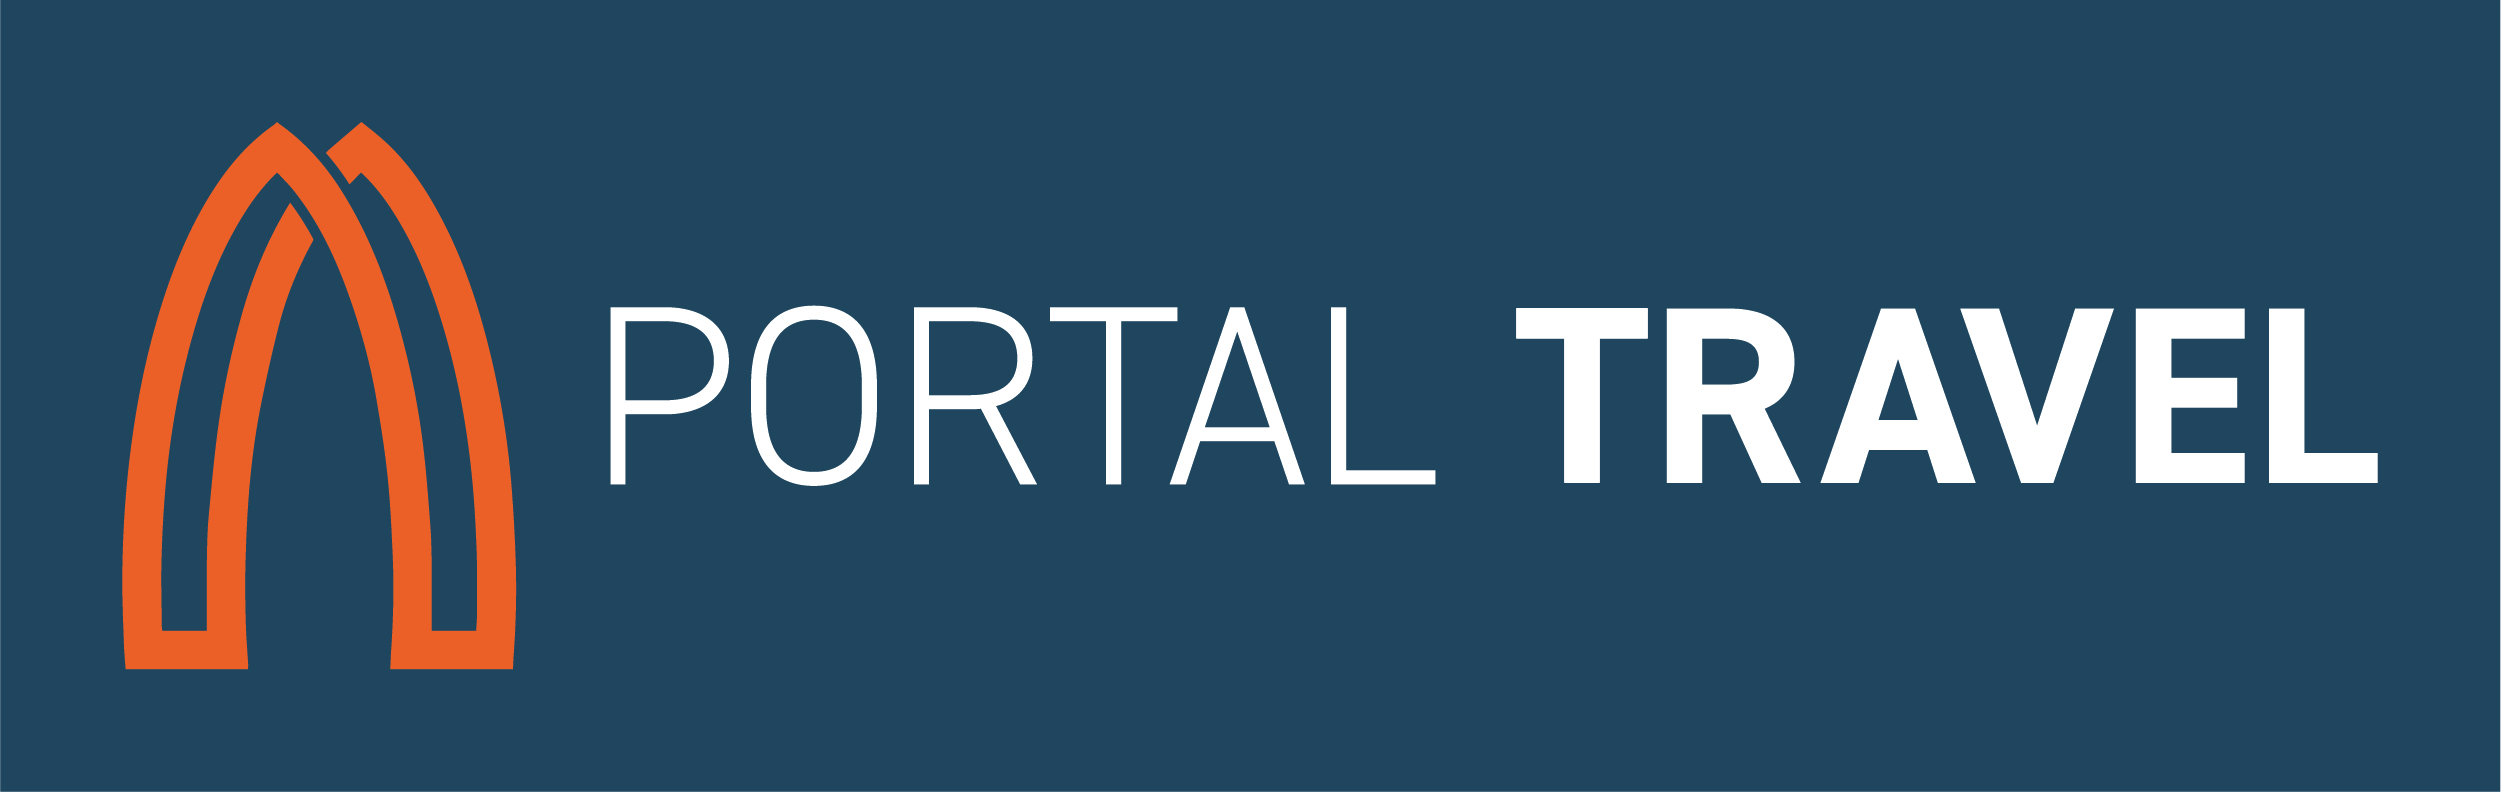 Portal Travel